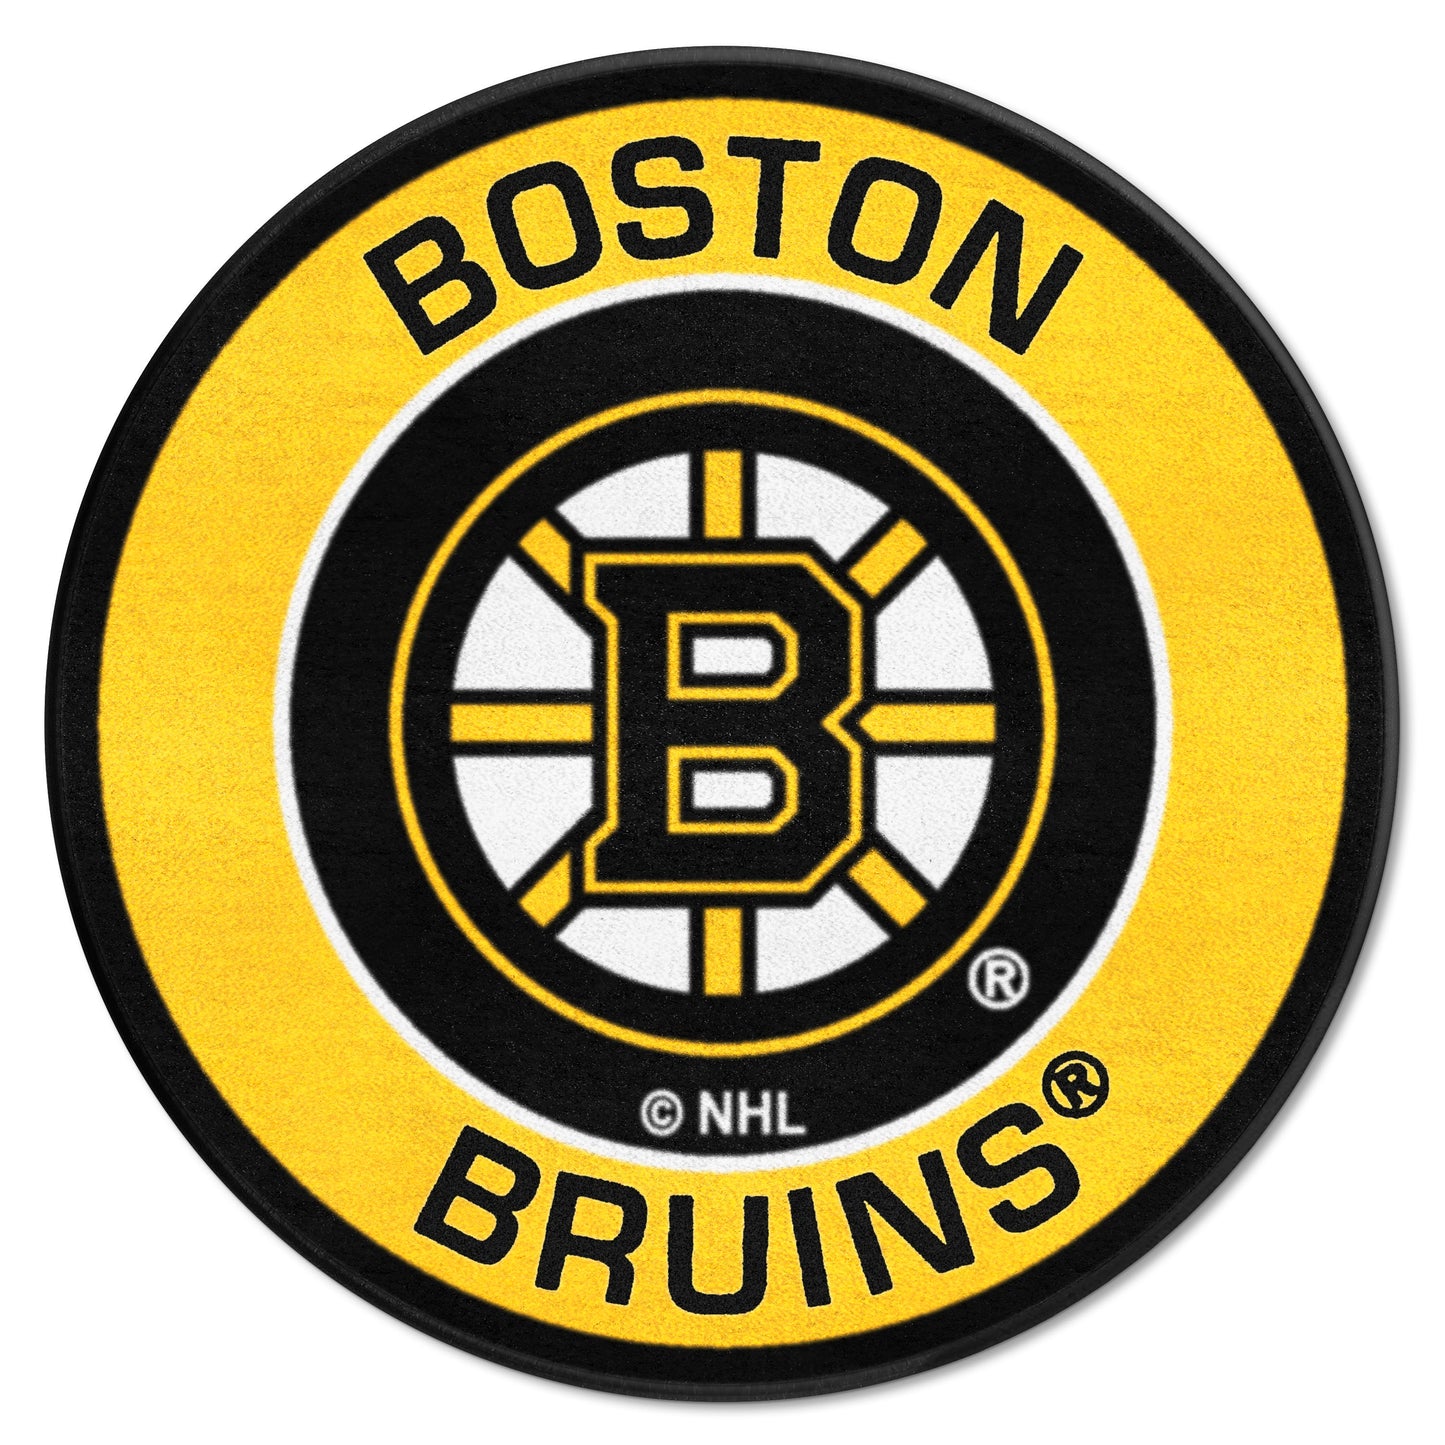 Boston Bruins Roundel Rug - 27in. Diameter